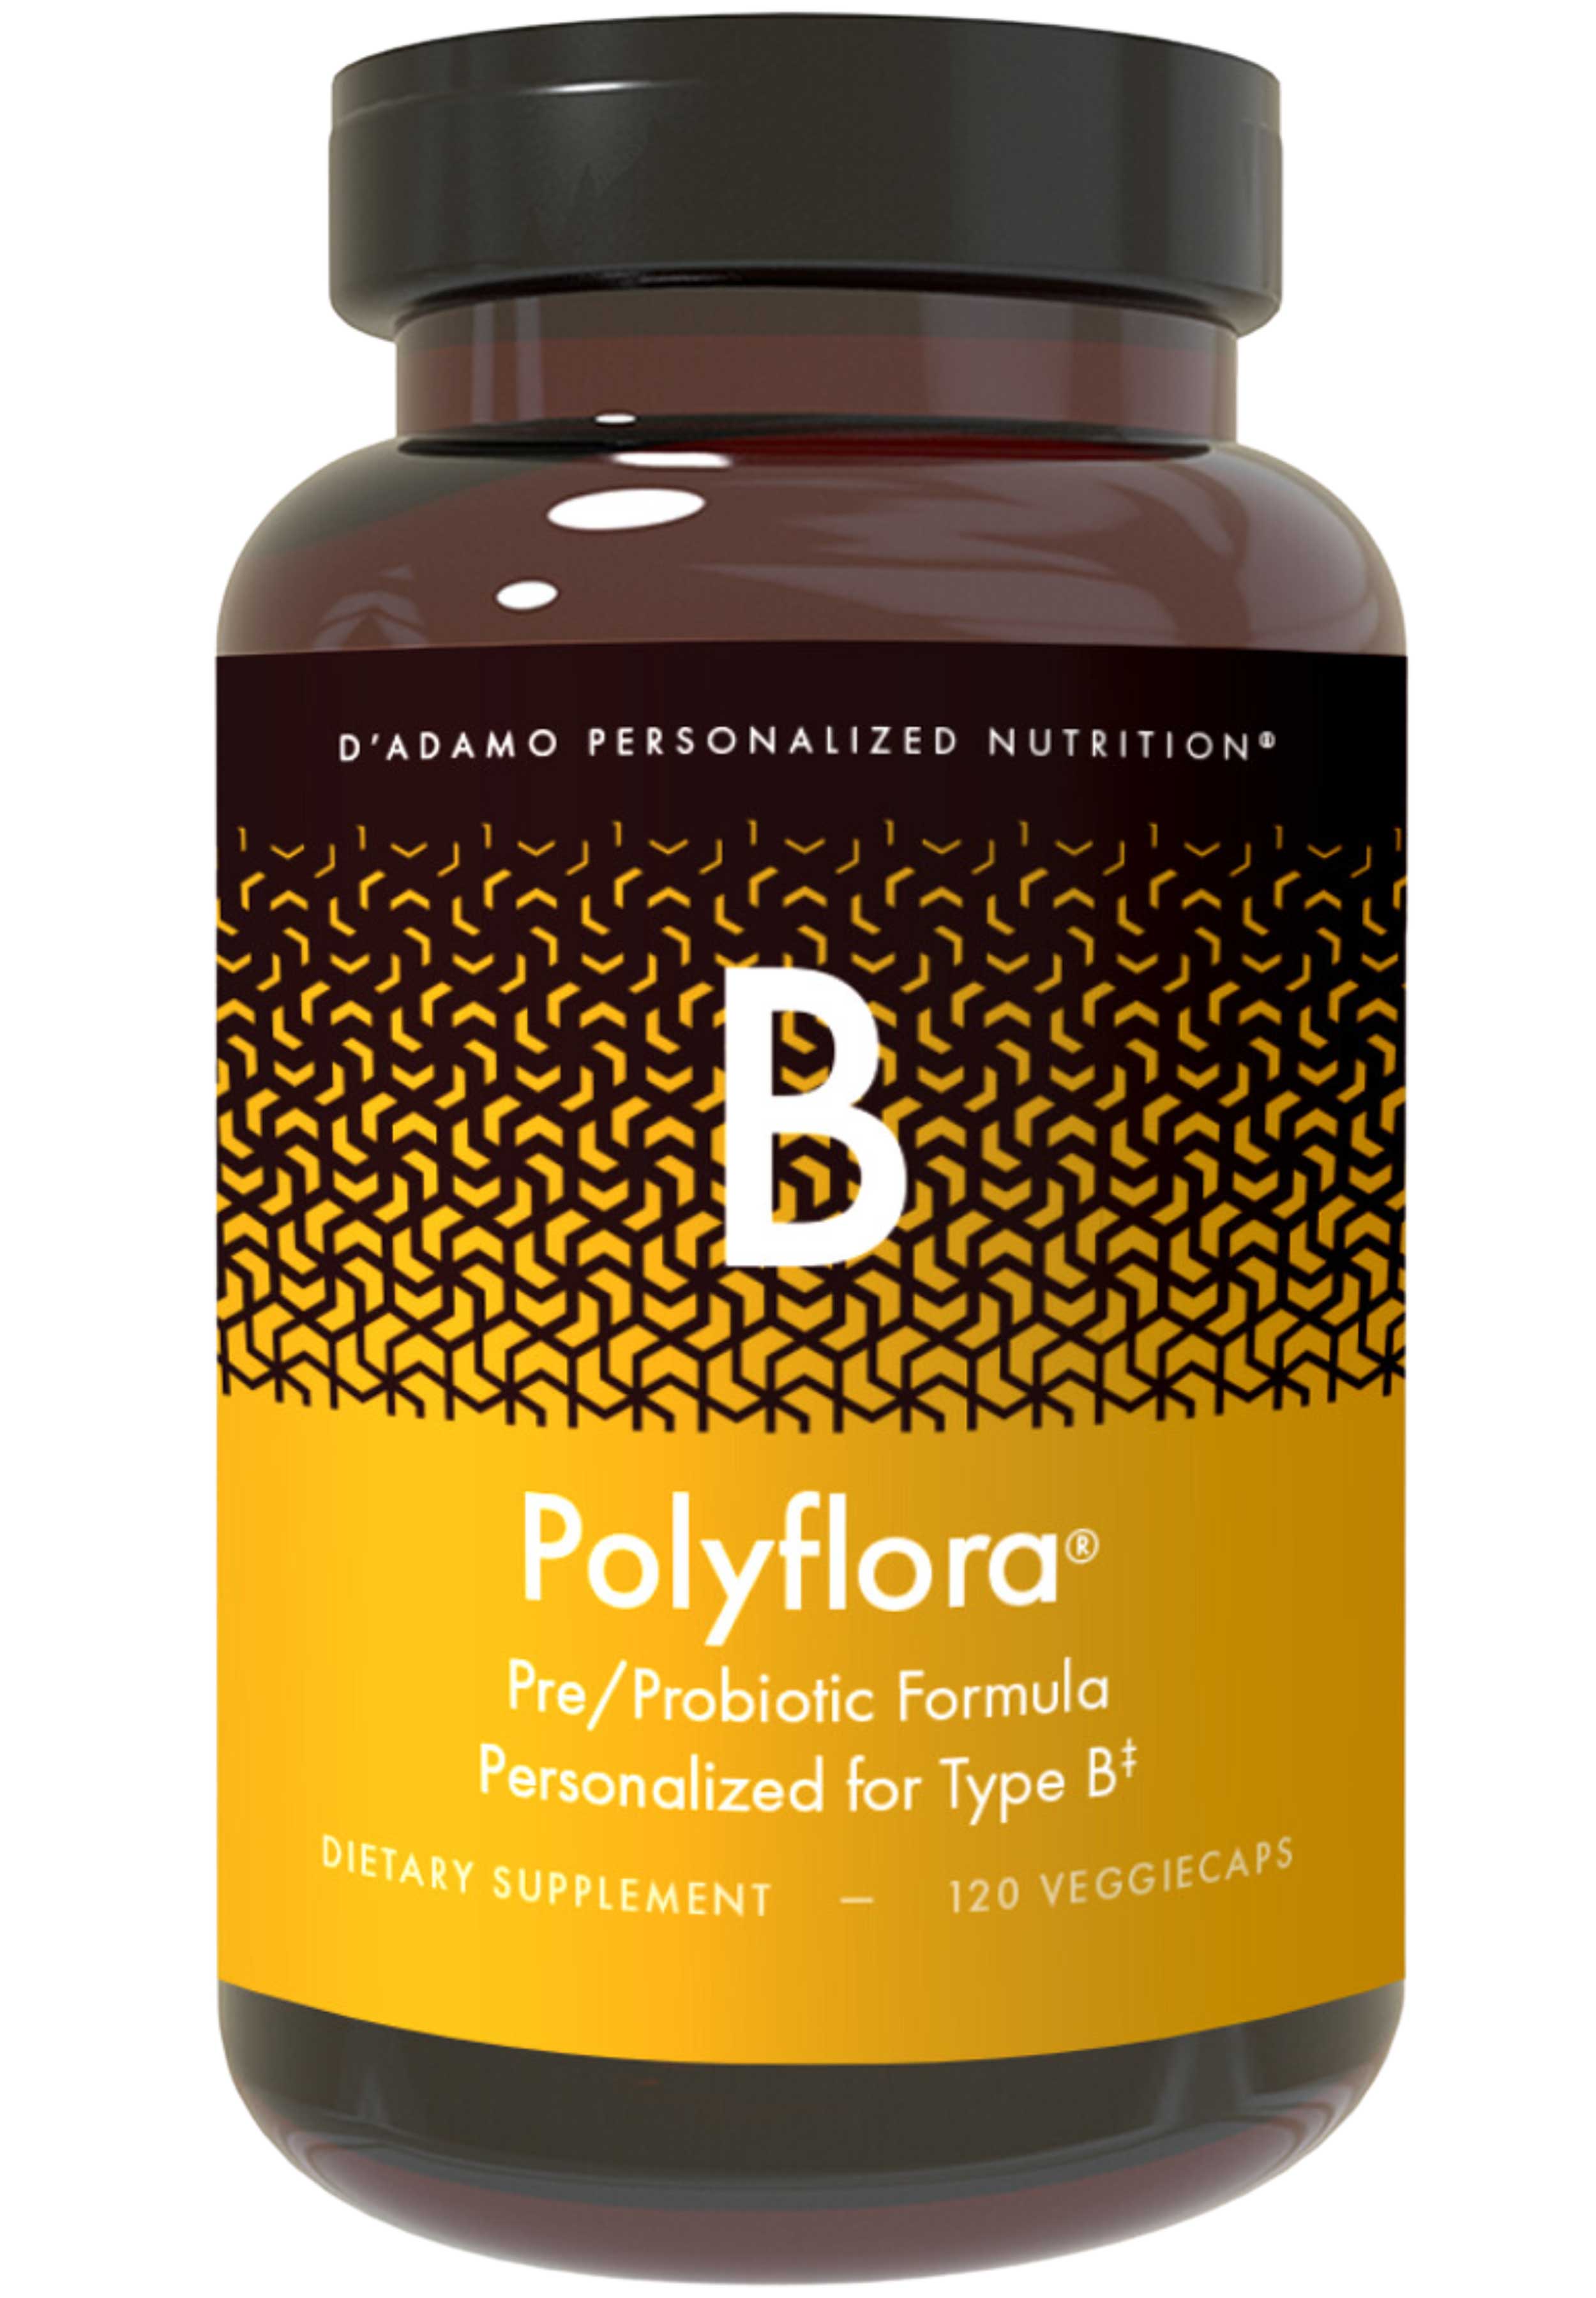 D'Adamo Personalized Nutrition Polyflora B